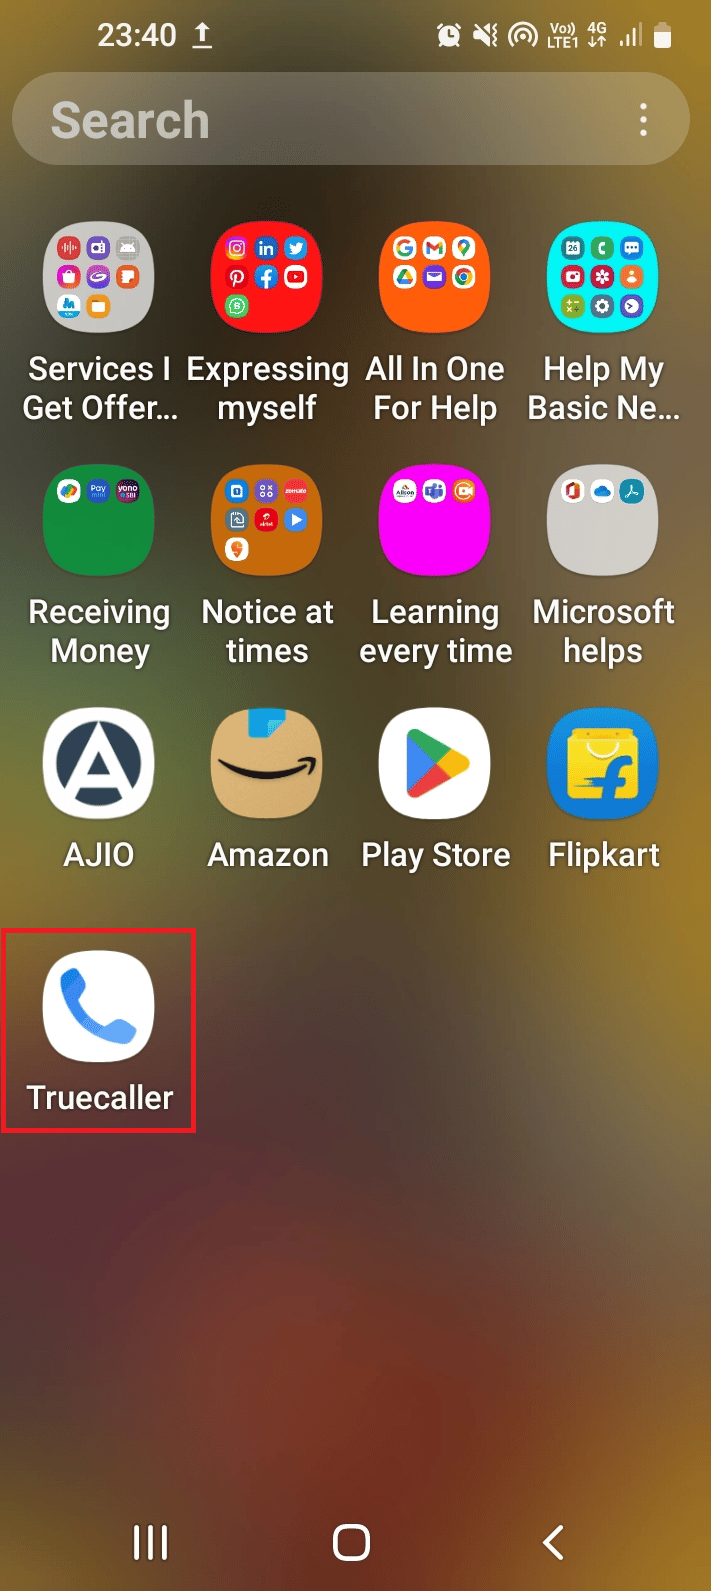 Swipe the screen upwards and tap on the Truecaller app